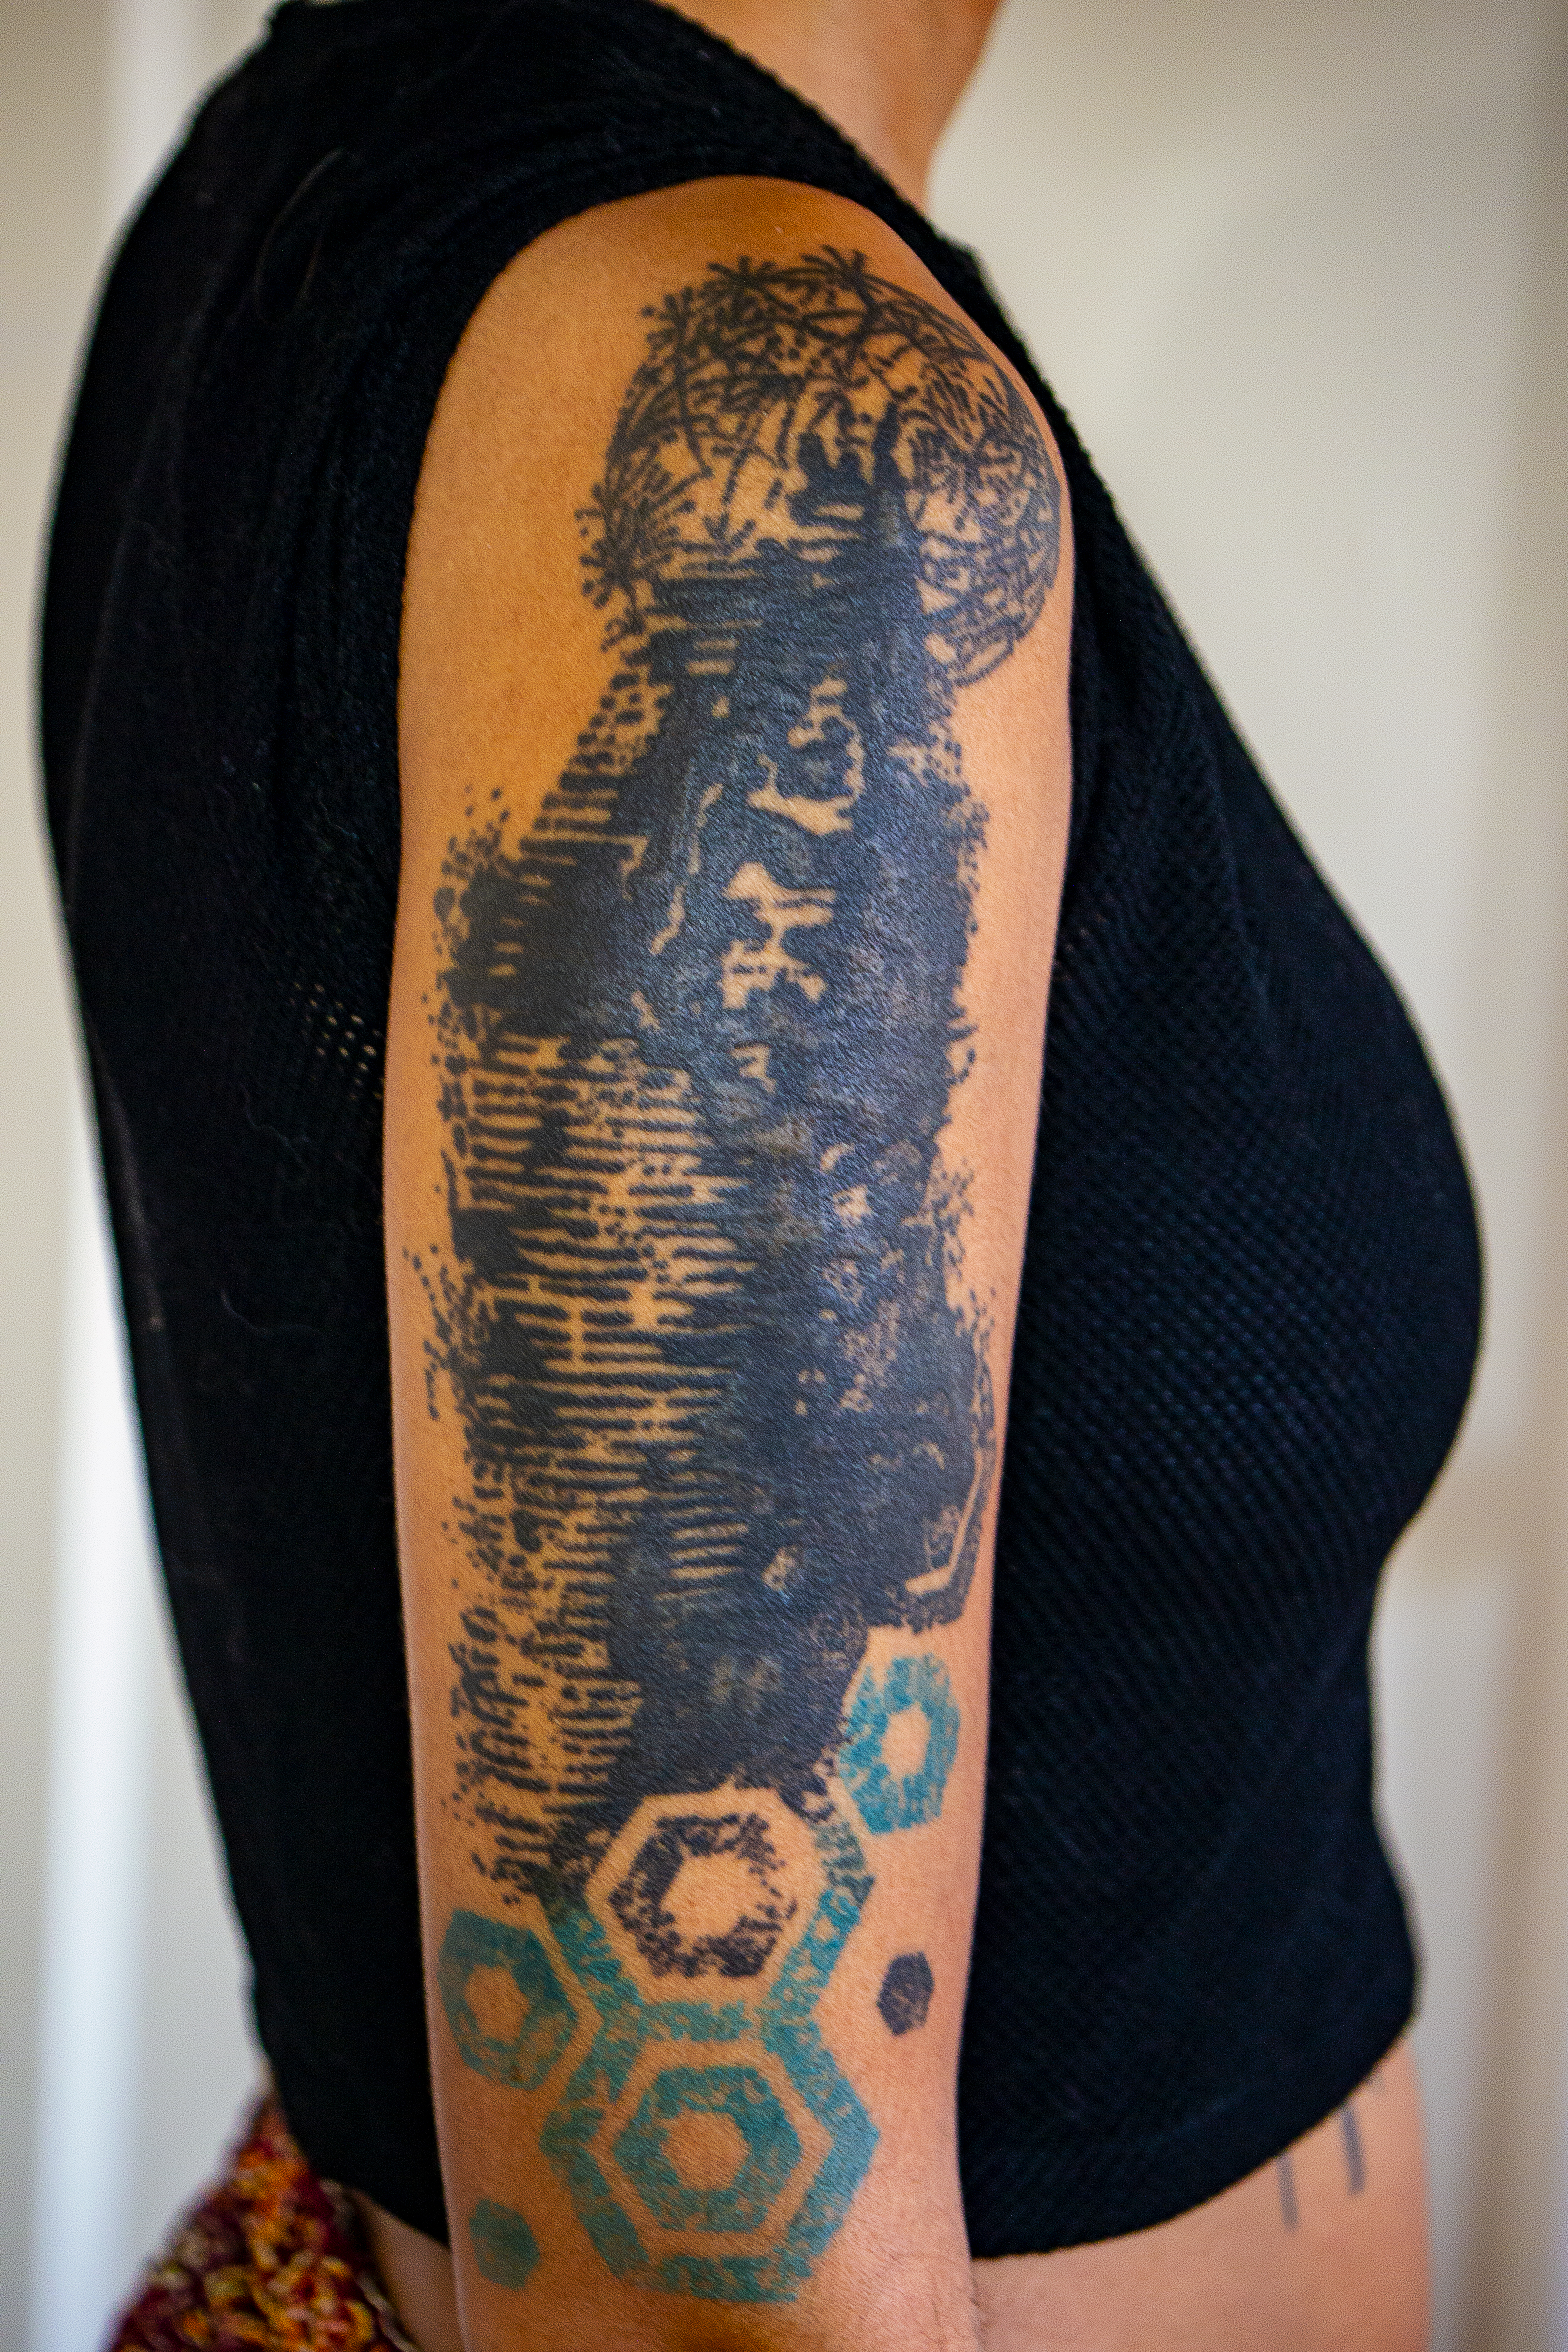 Black and blue trash polka tattoo on brown skin of Sisyphus and the rhizome.